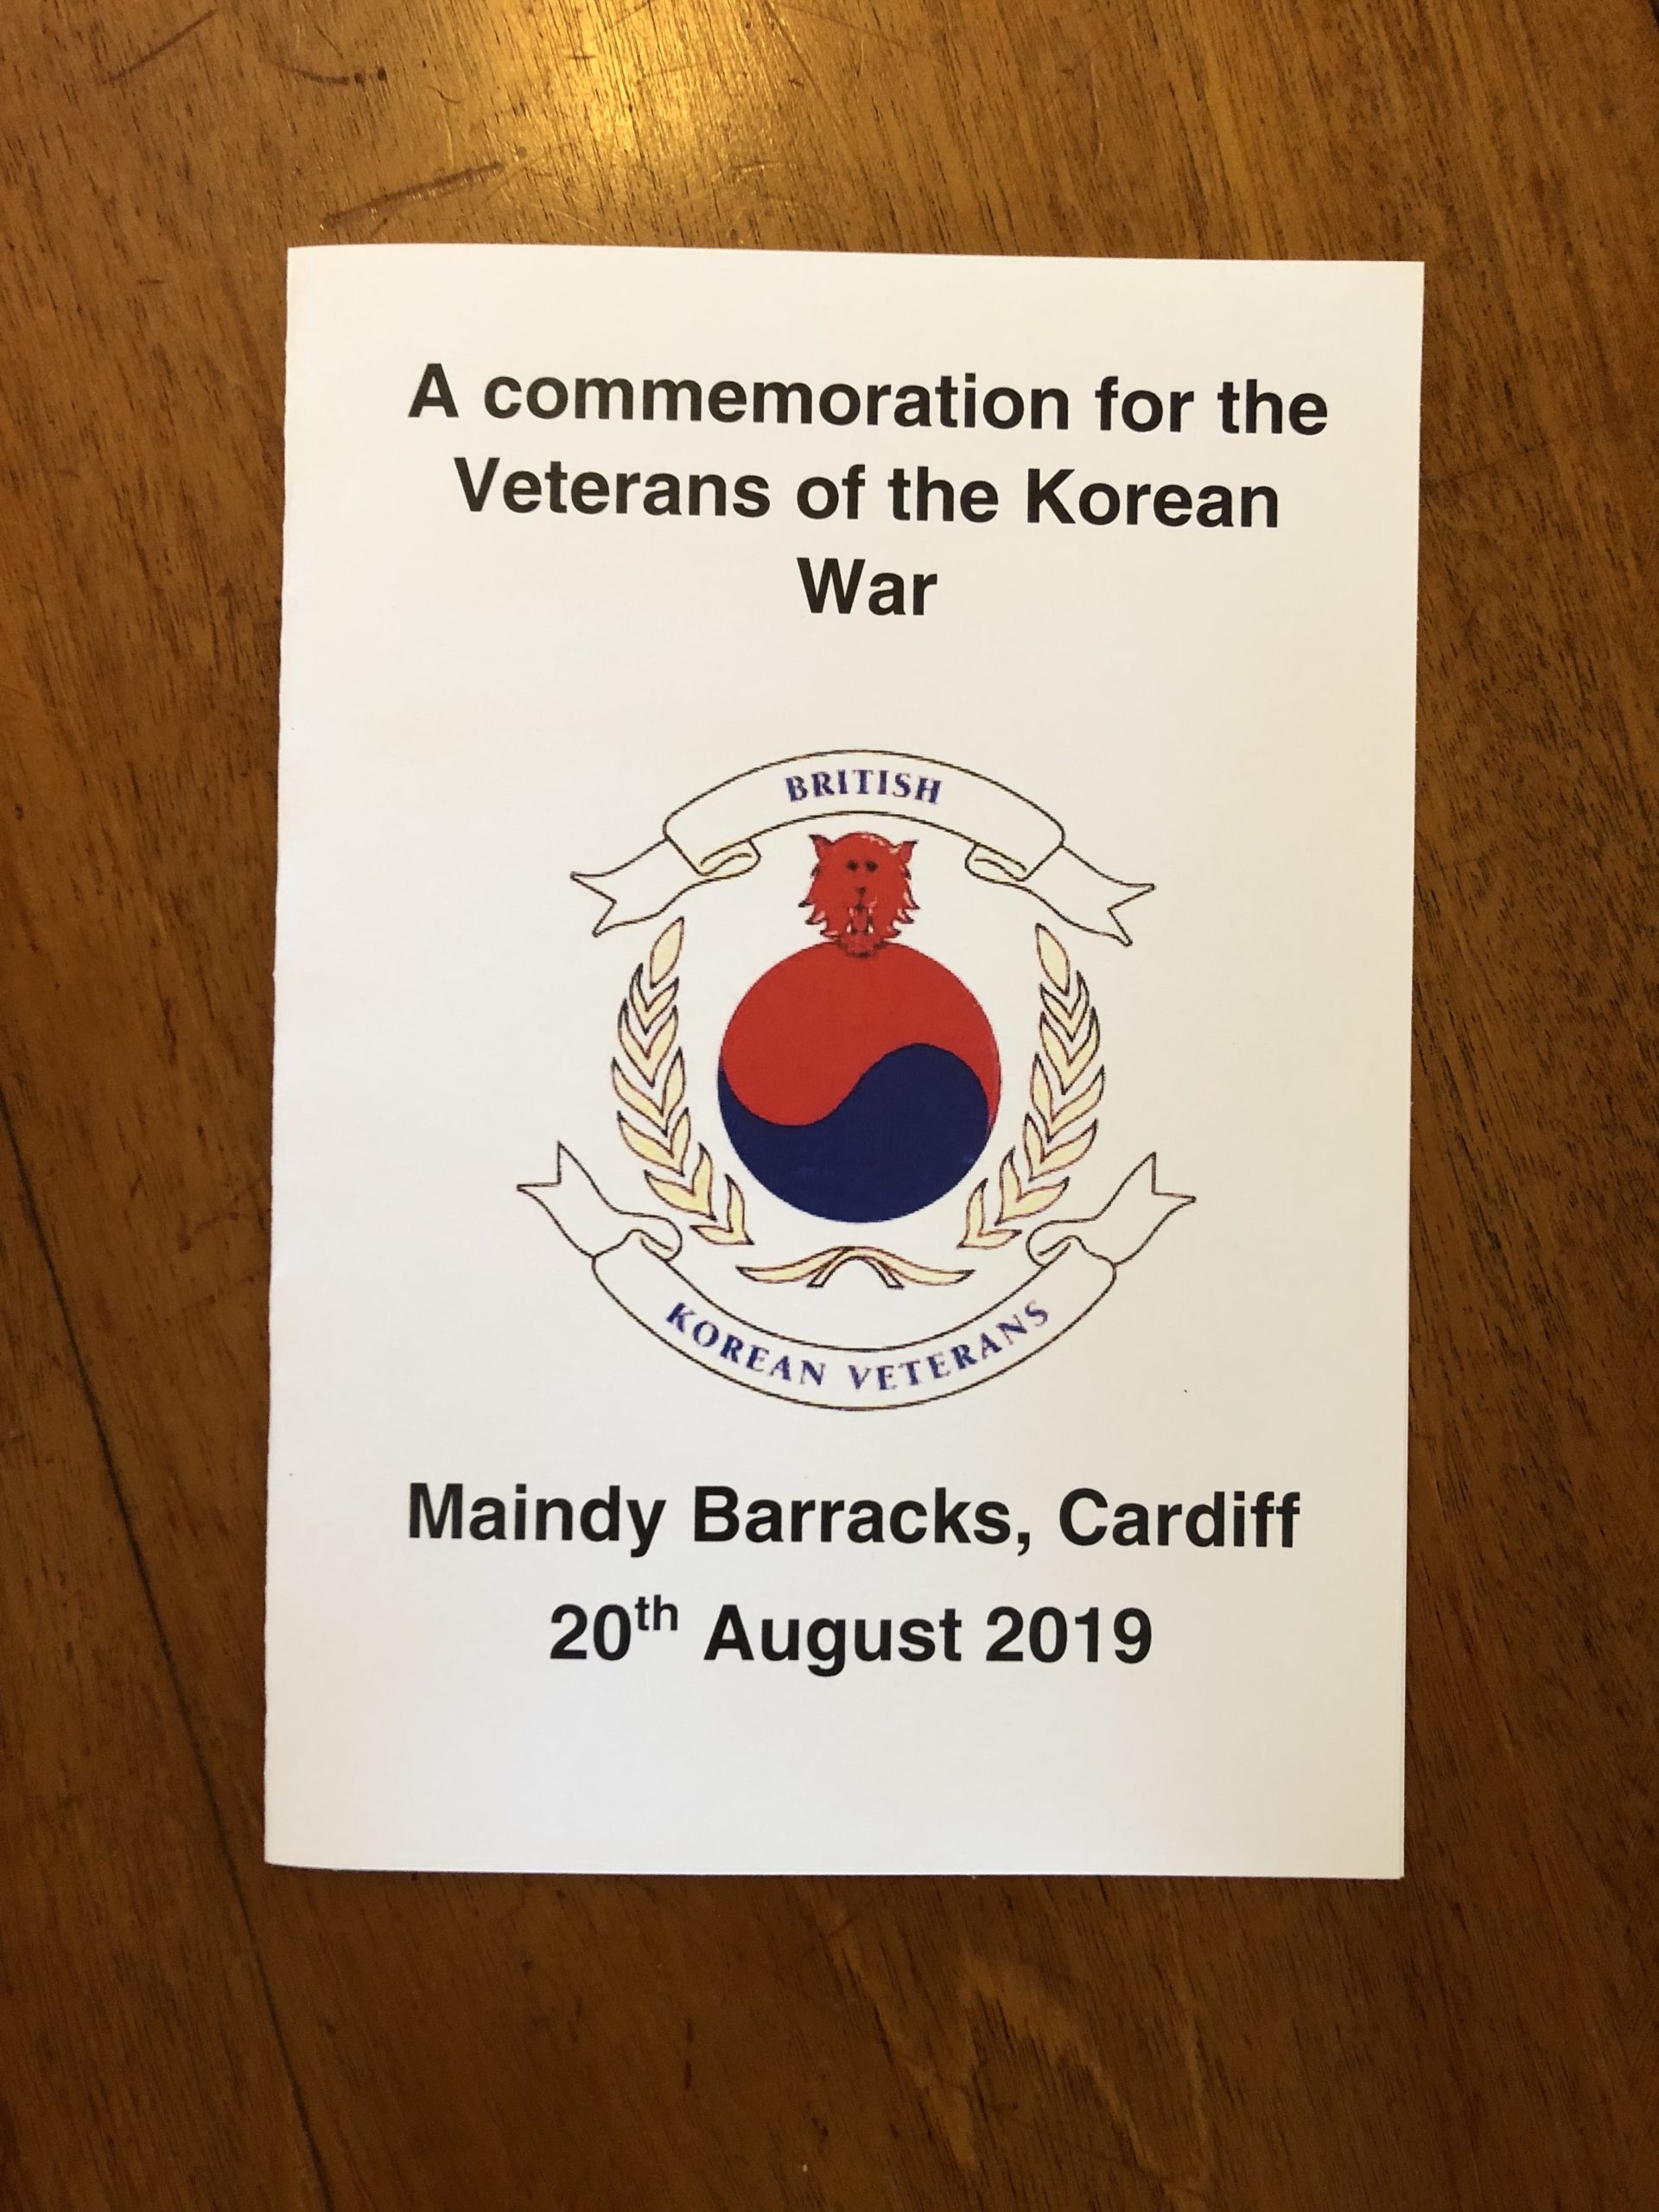 Korean War Memorials - Cardiff - Wales